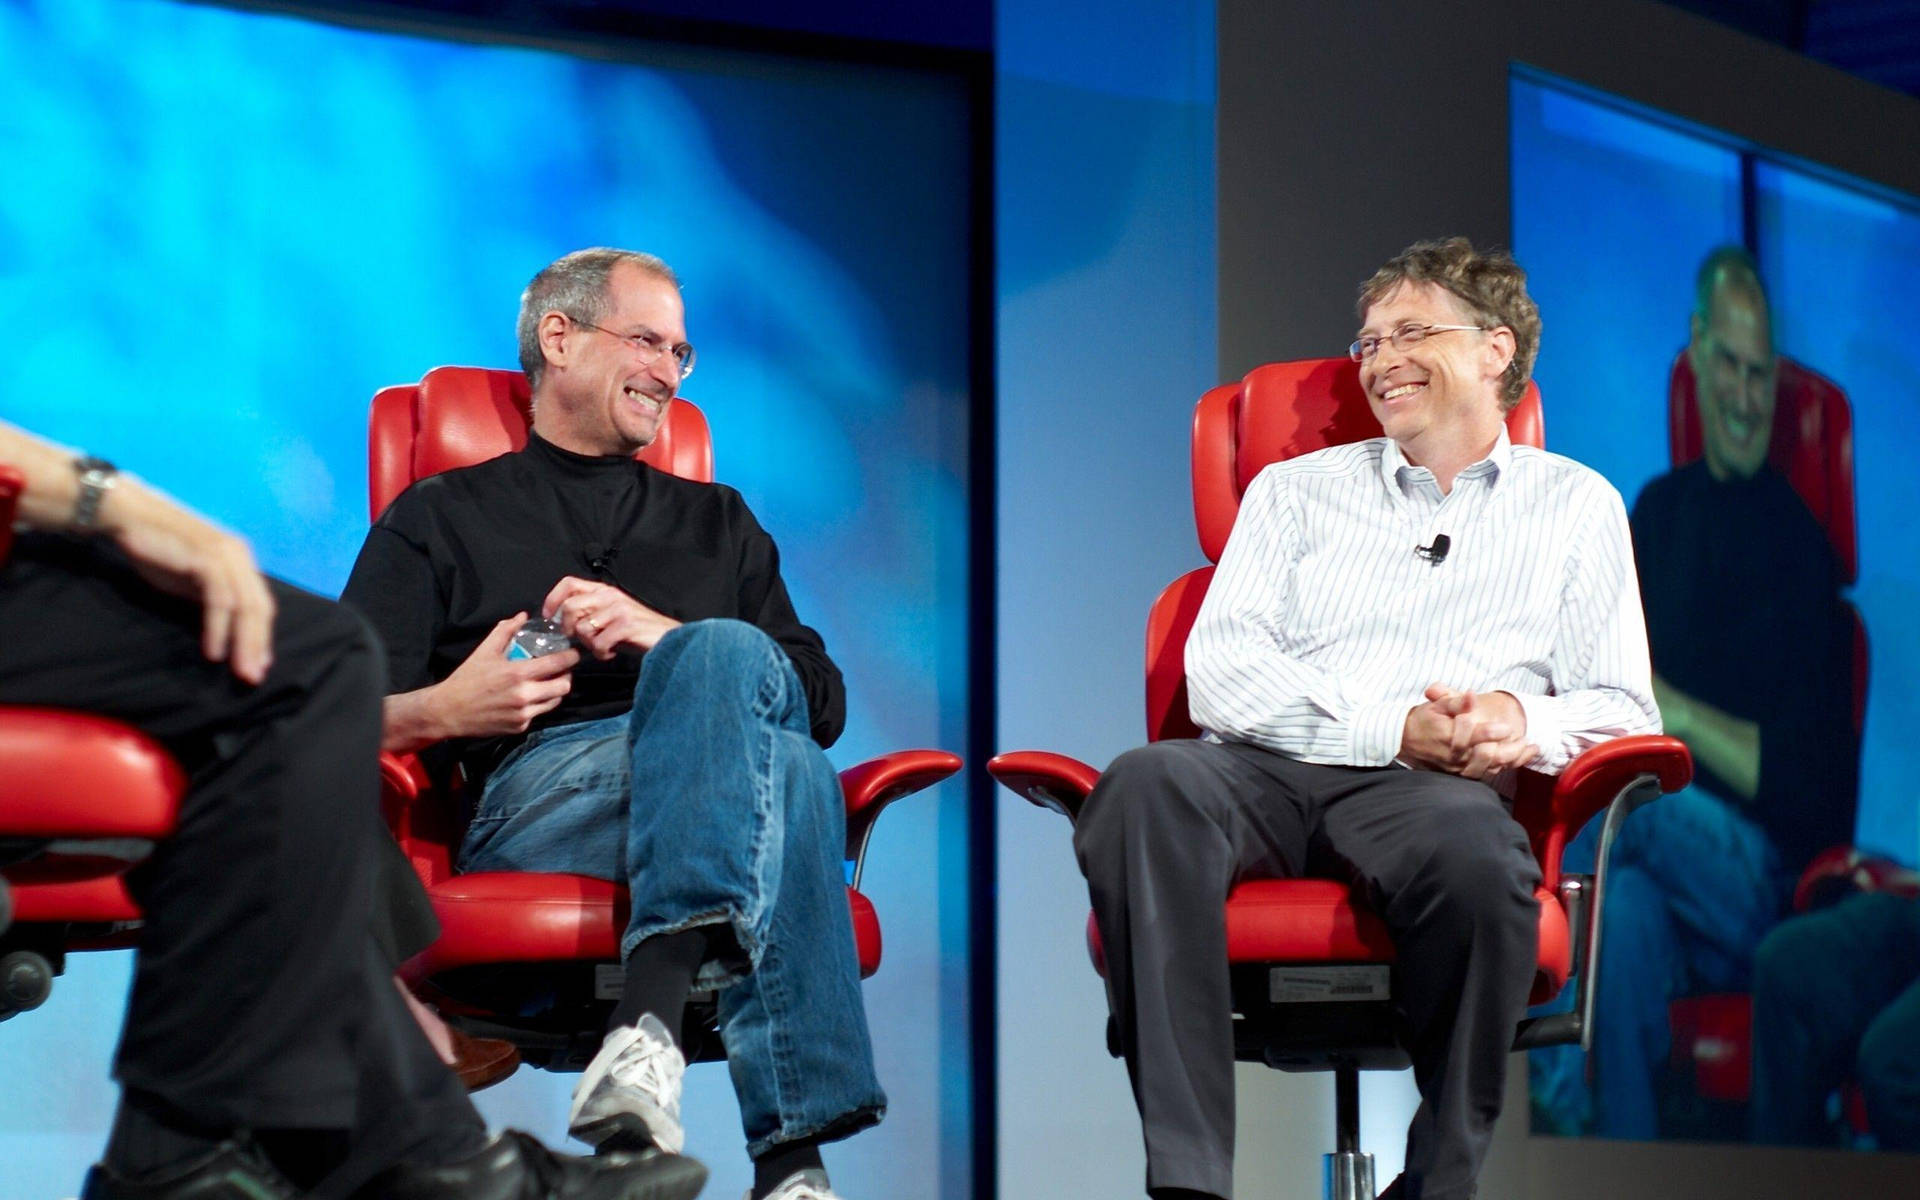 Bill Gates And Steve Jobs